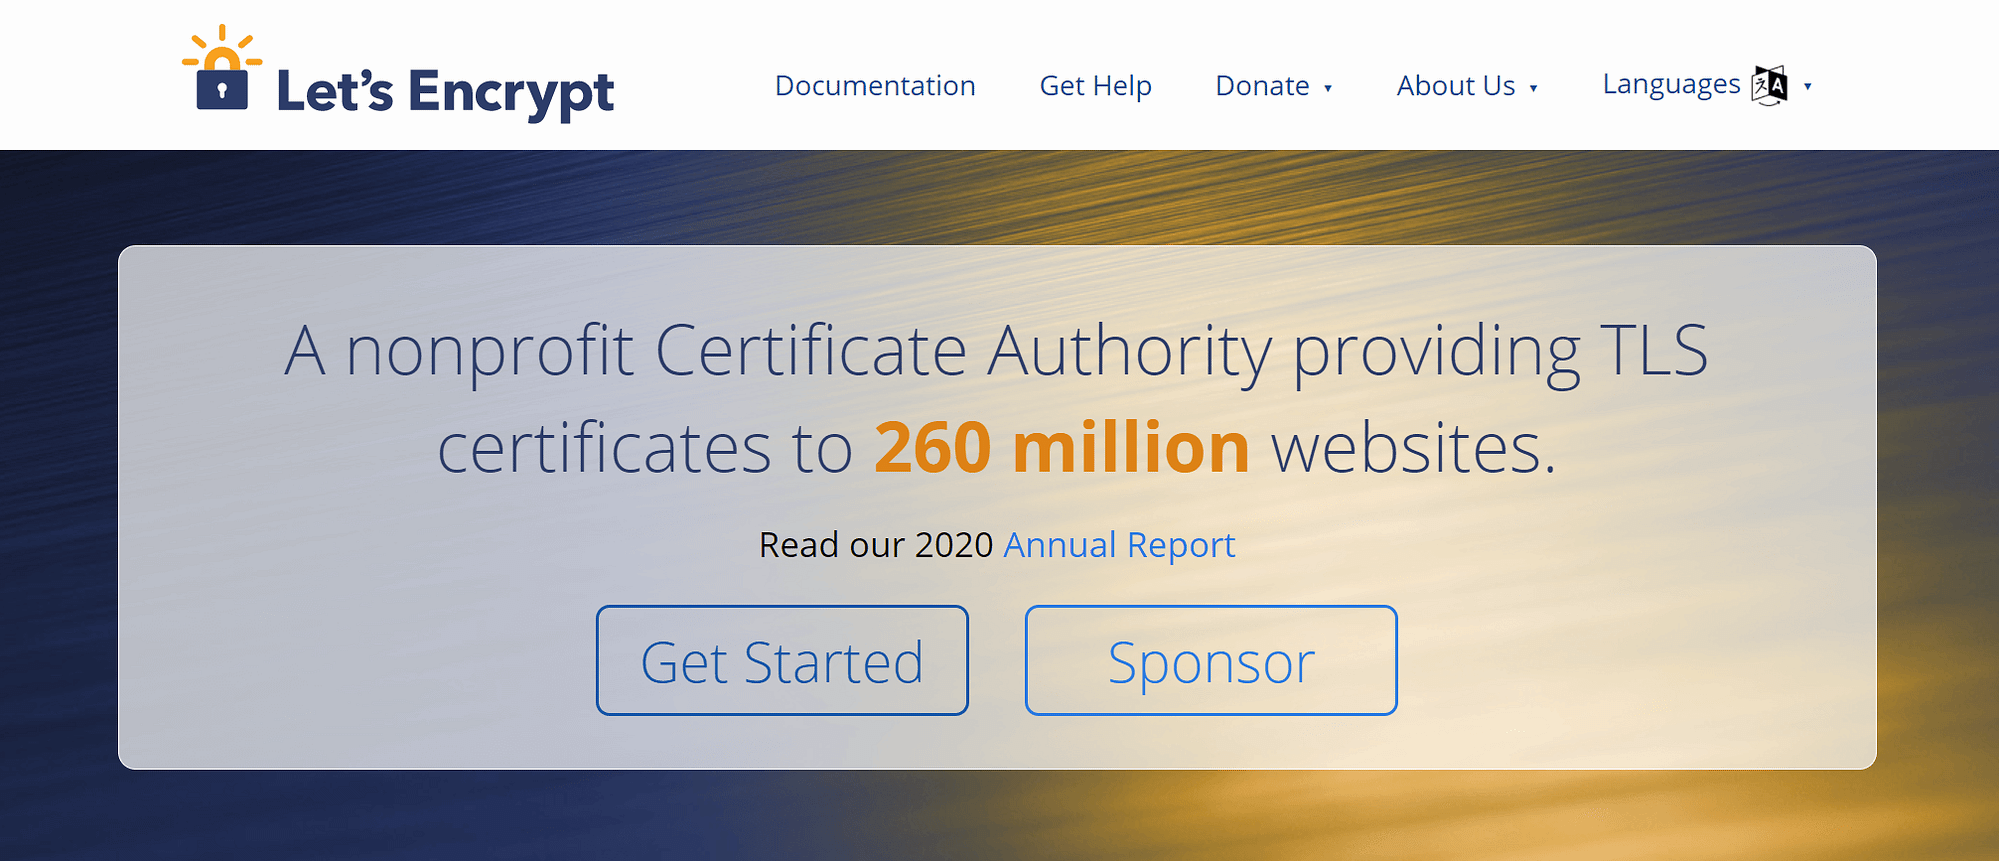 Let's Encrypt 是一个提供免费 SSL 证书的非营利组织